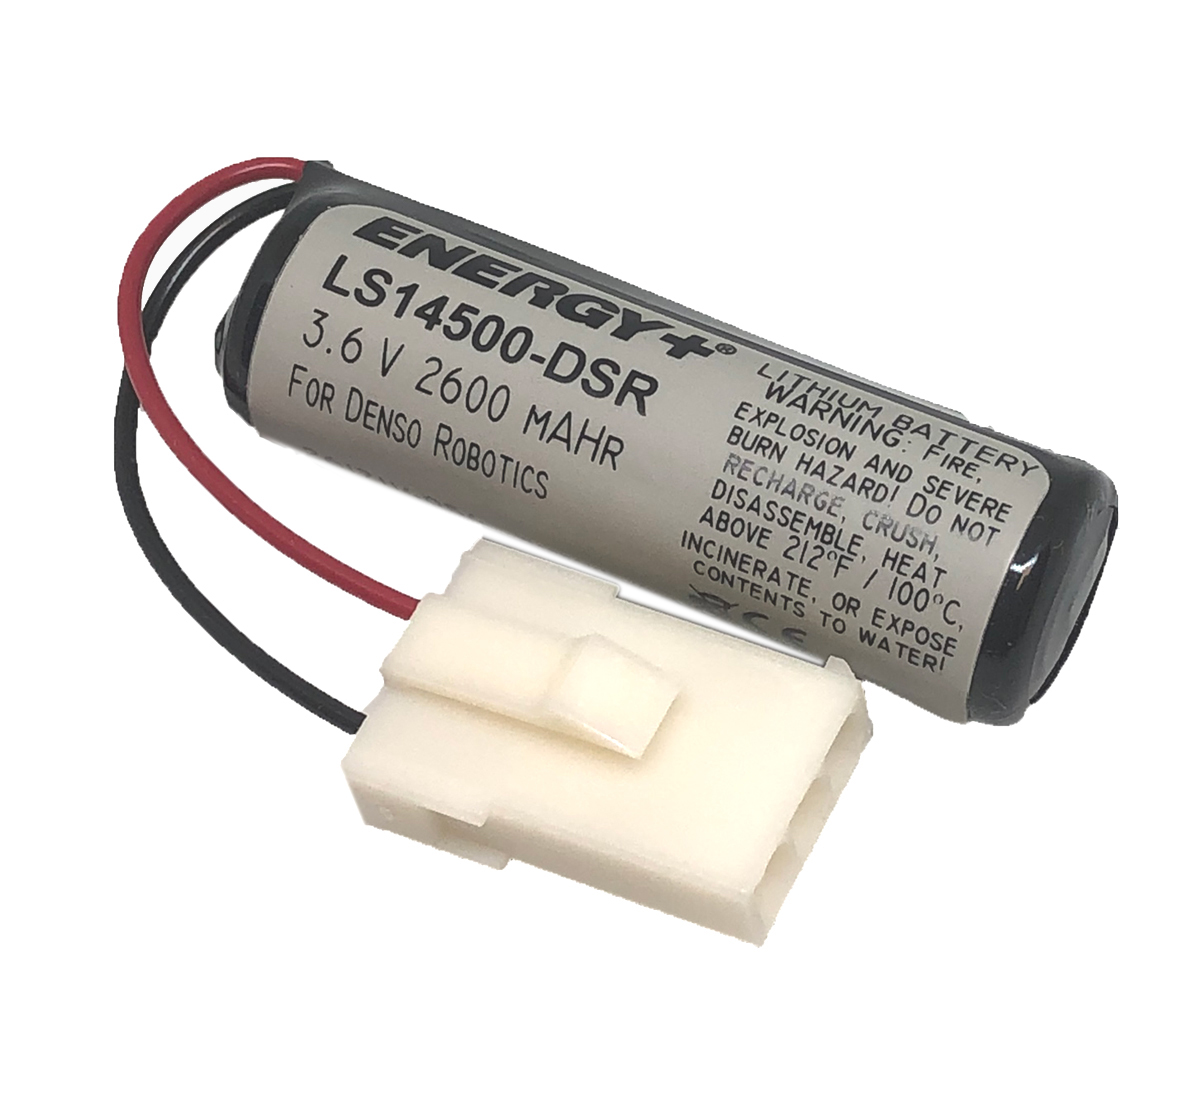 Denso 410611-0030 PLC Battery LS14500-DSR